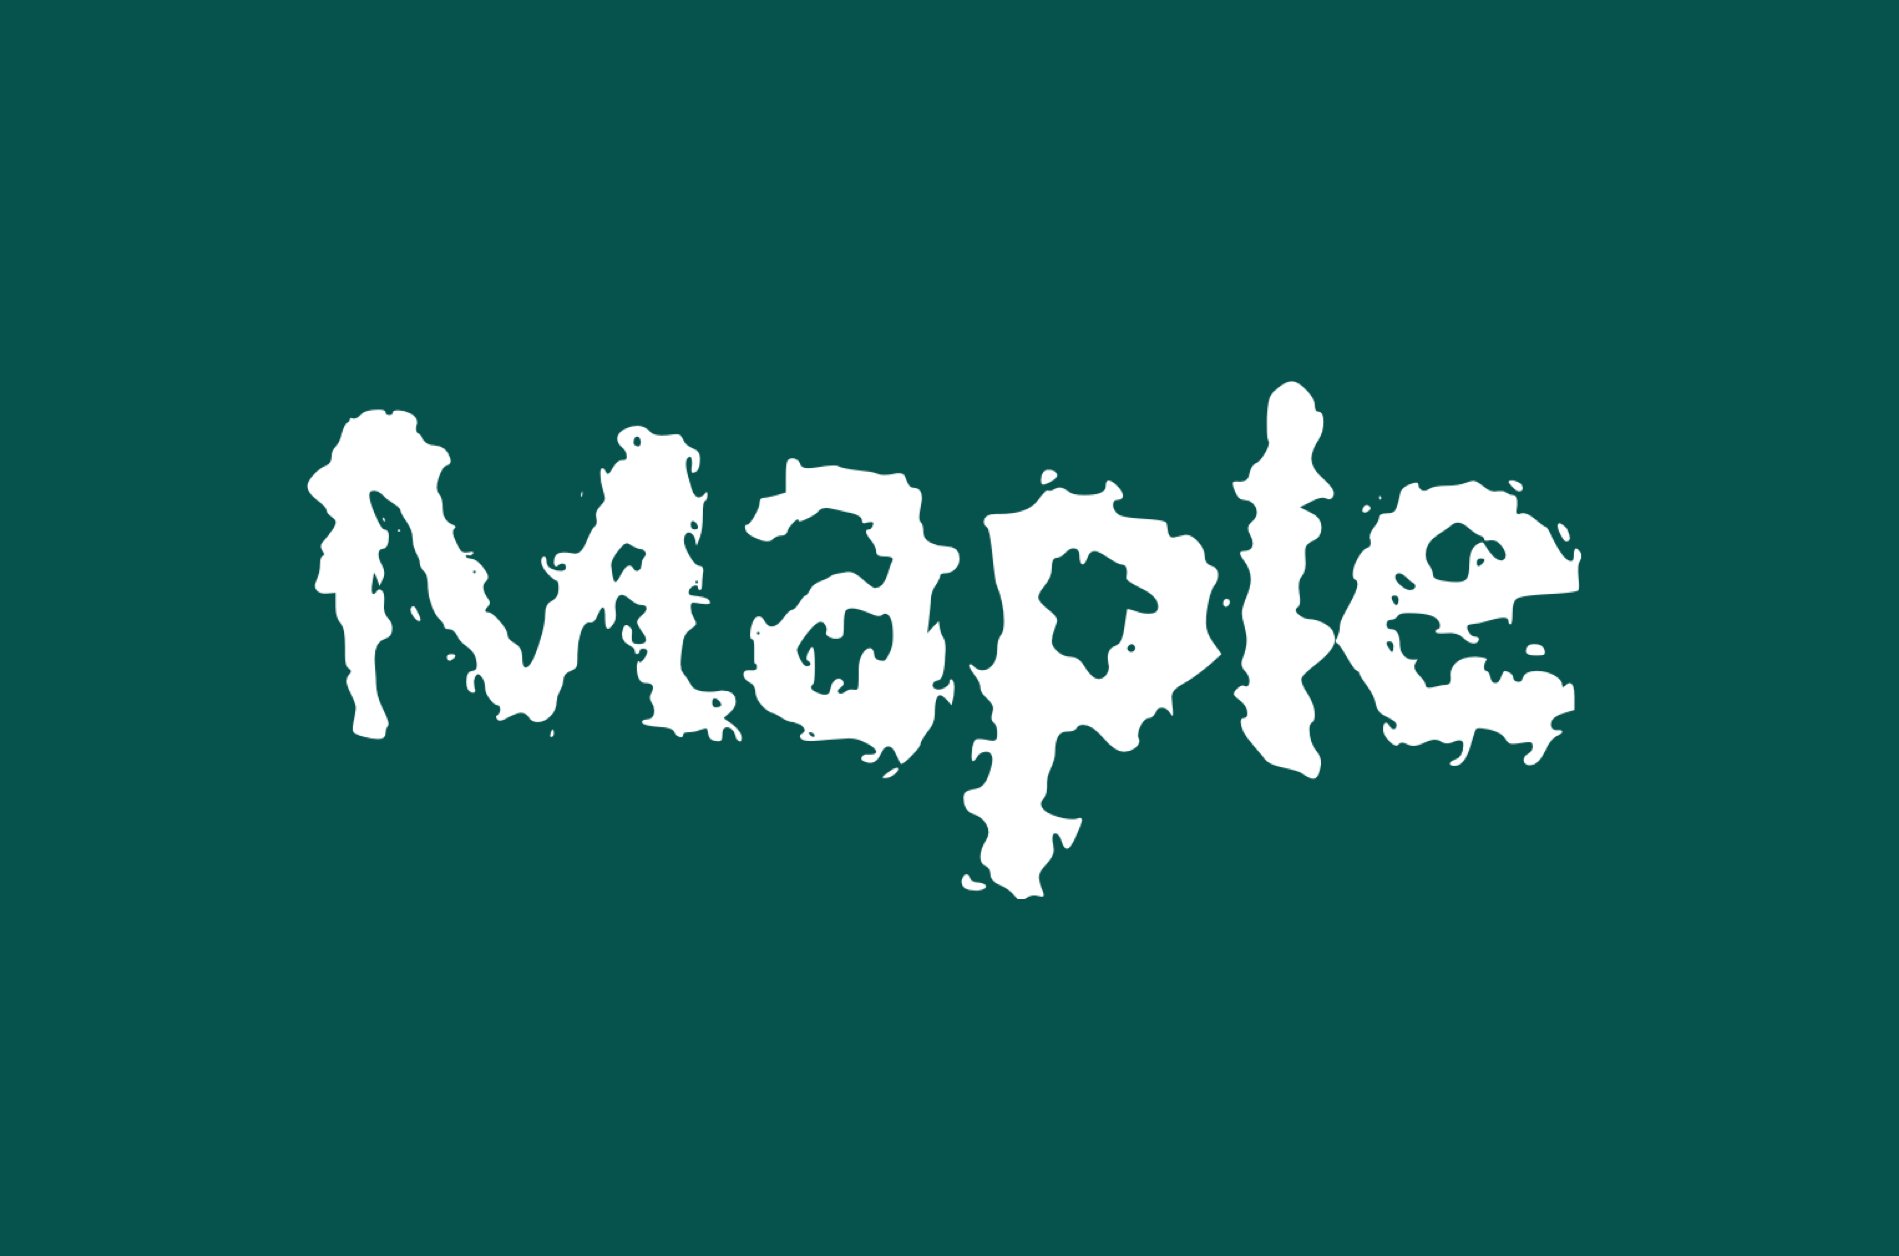 Maple Handwritten Font cover image.